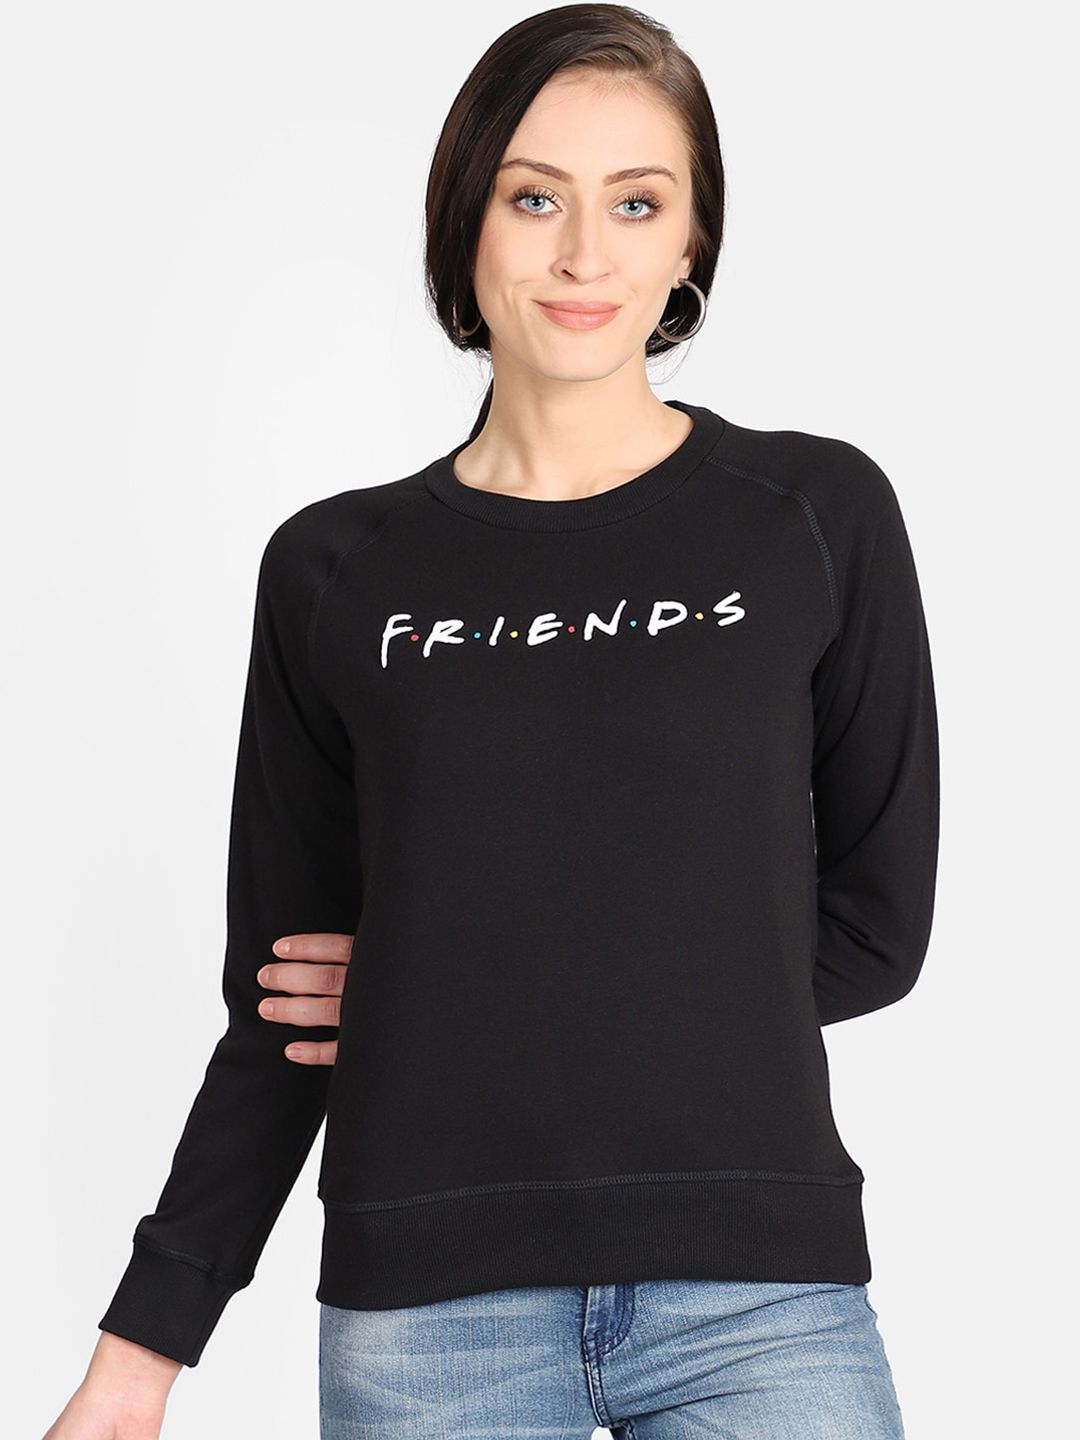 Free Authority Women Black Friends Printed Cotton Sweatshirt Price in India